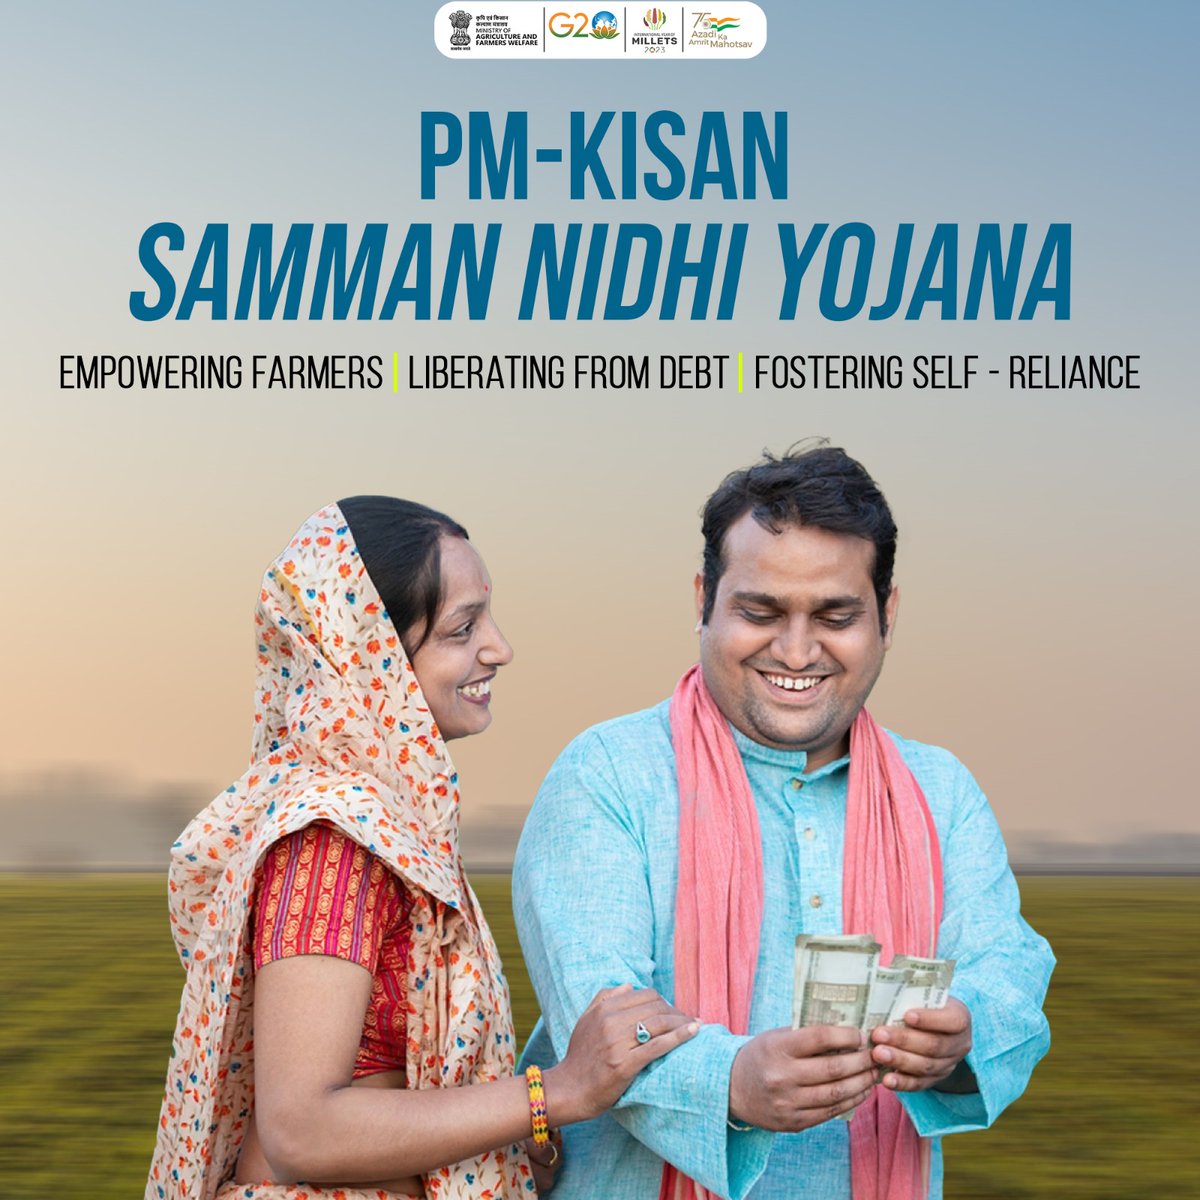 PMKisan Samman Nidhi Yojana, a transformative initiative, aims to empower farmers by liberating their debts and fostering self-reliance.

#agrigoi #PMKisan #AatmanirbharKrishi #Benefit2farmers #DBT #farmers